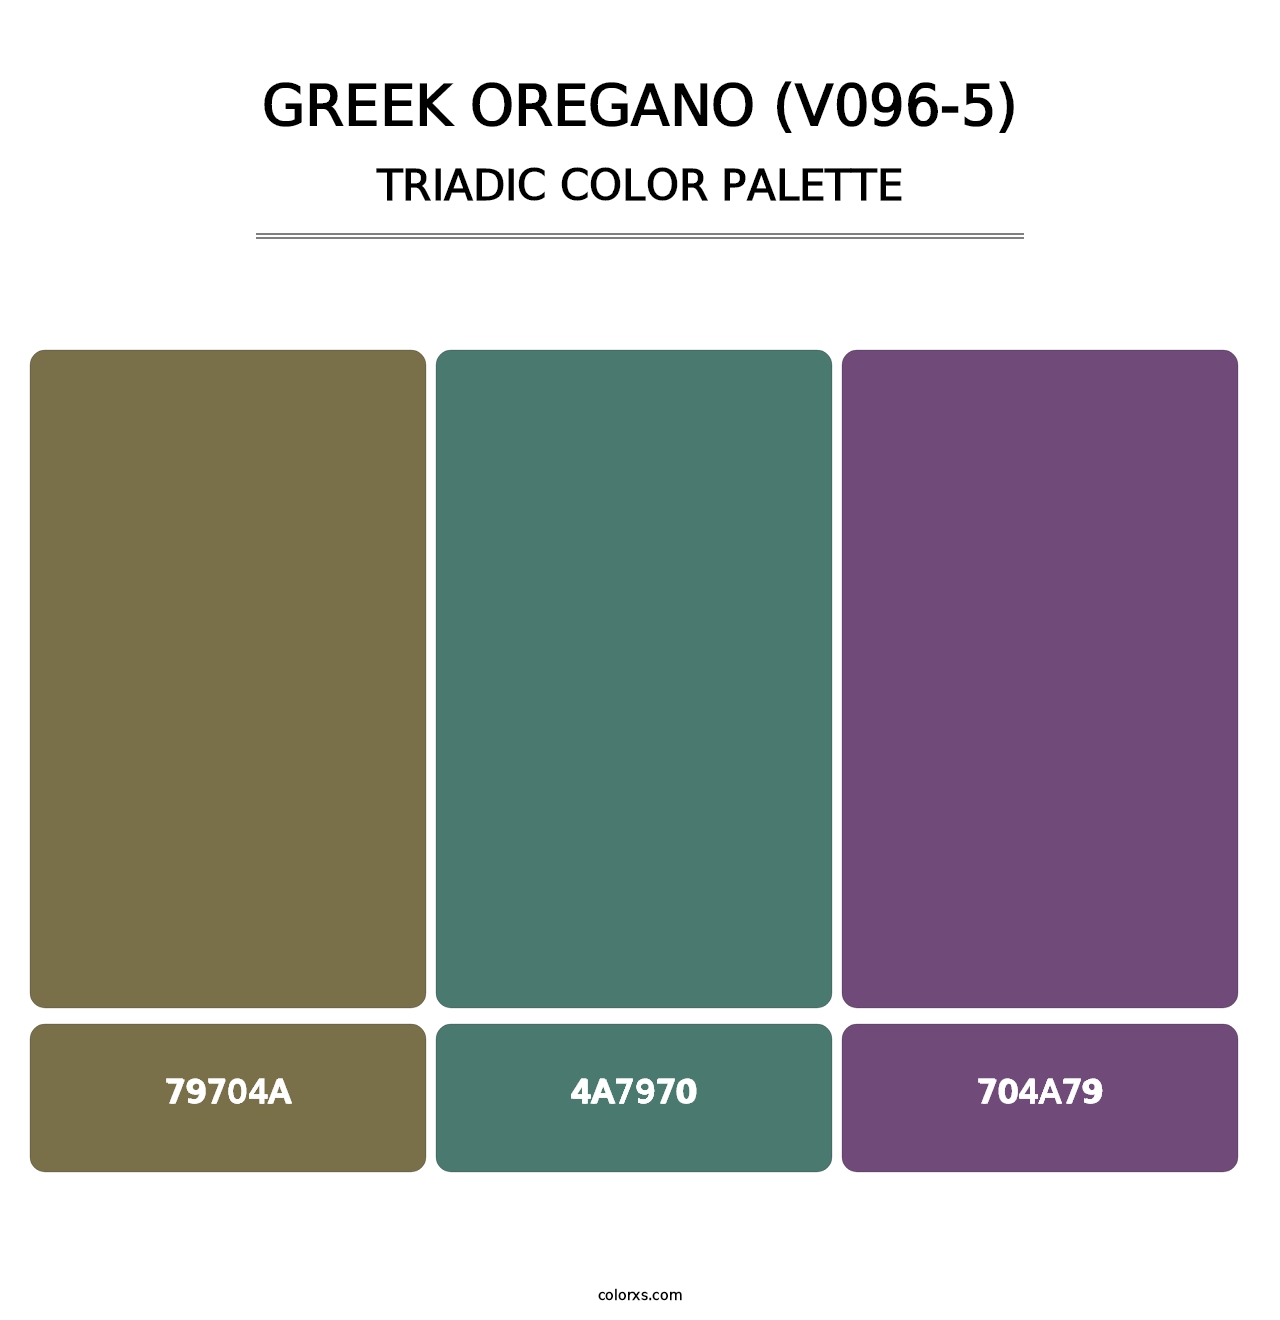 Greek Oregano (V096-5) - Triadic Color Palette